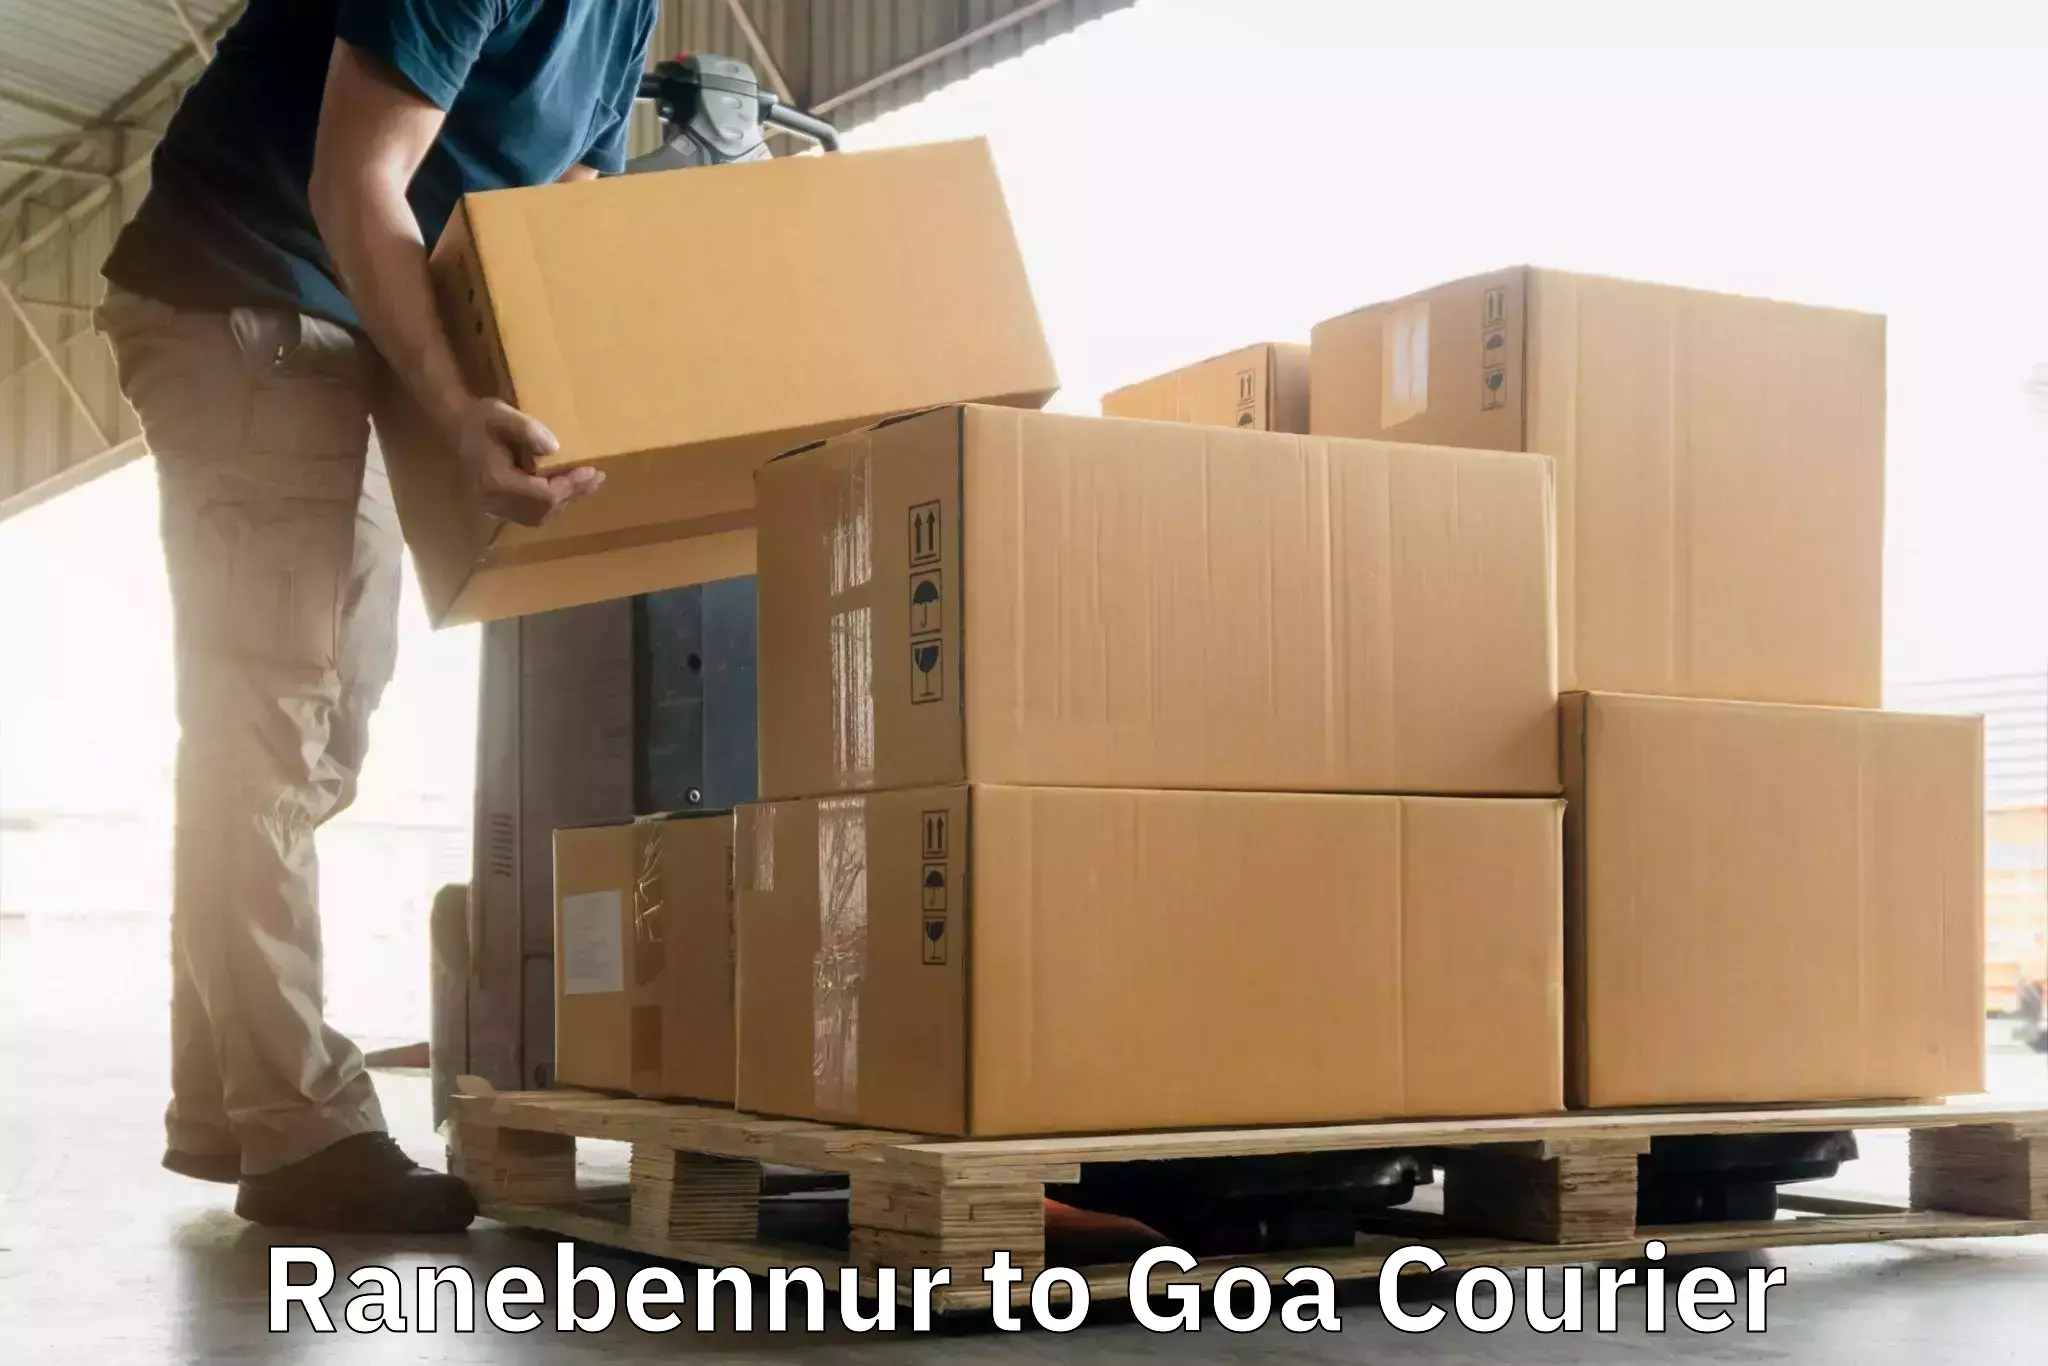 Global logistics network Ranebennur to Goa